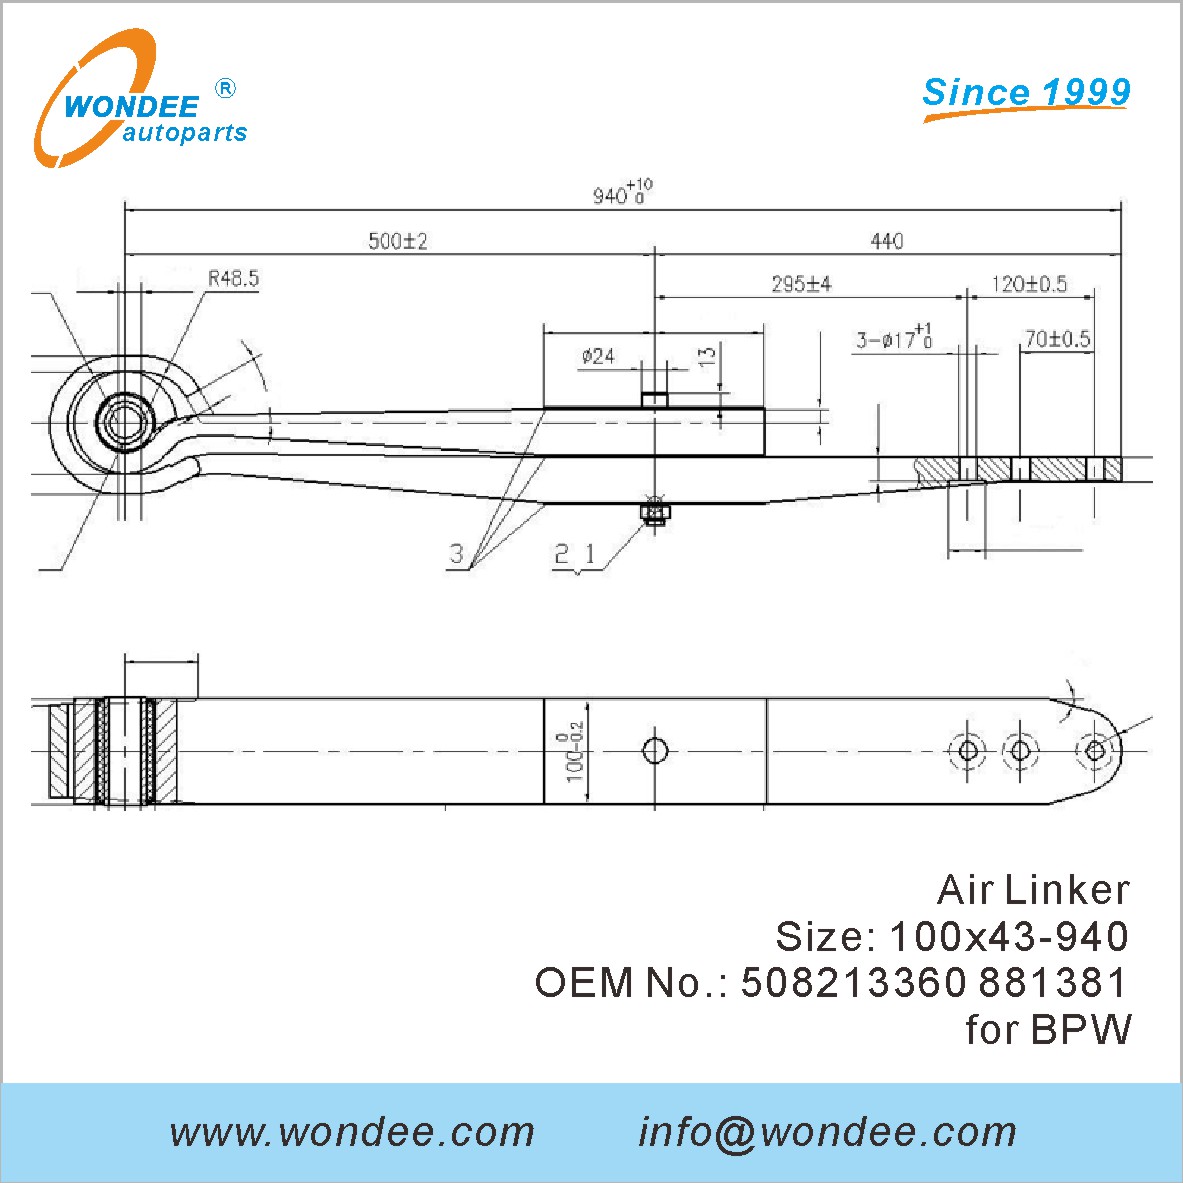 WONDEE Autoparts Air Linker OEM 508213360 881381 for BPW